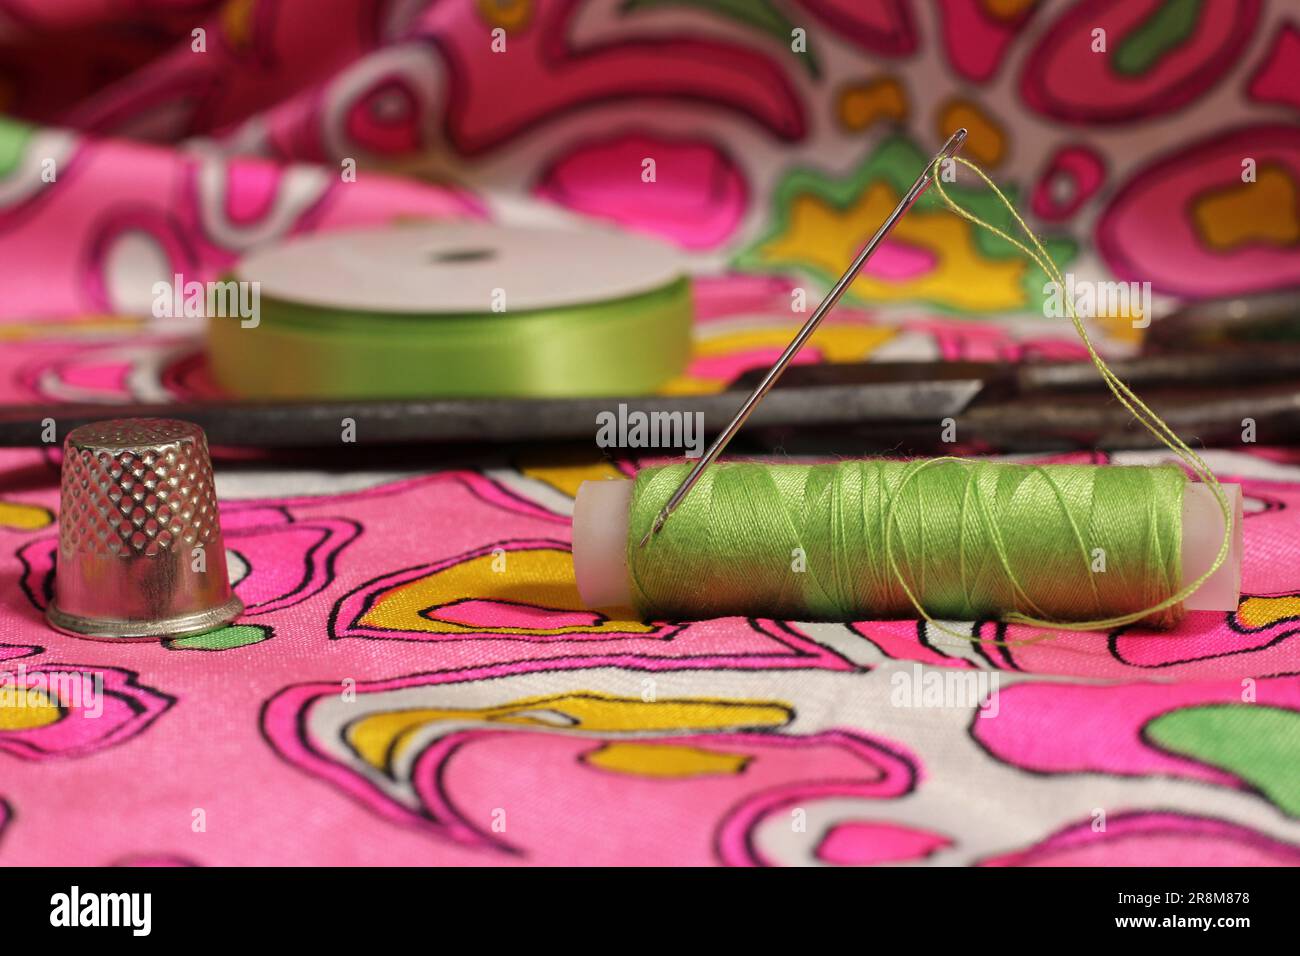 Spool of green thread and needle Stock Photo - Alamy